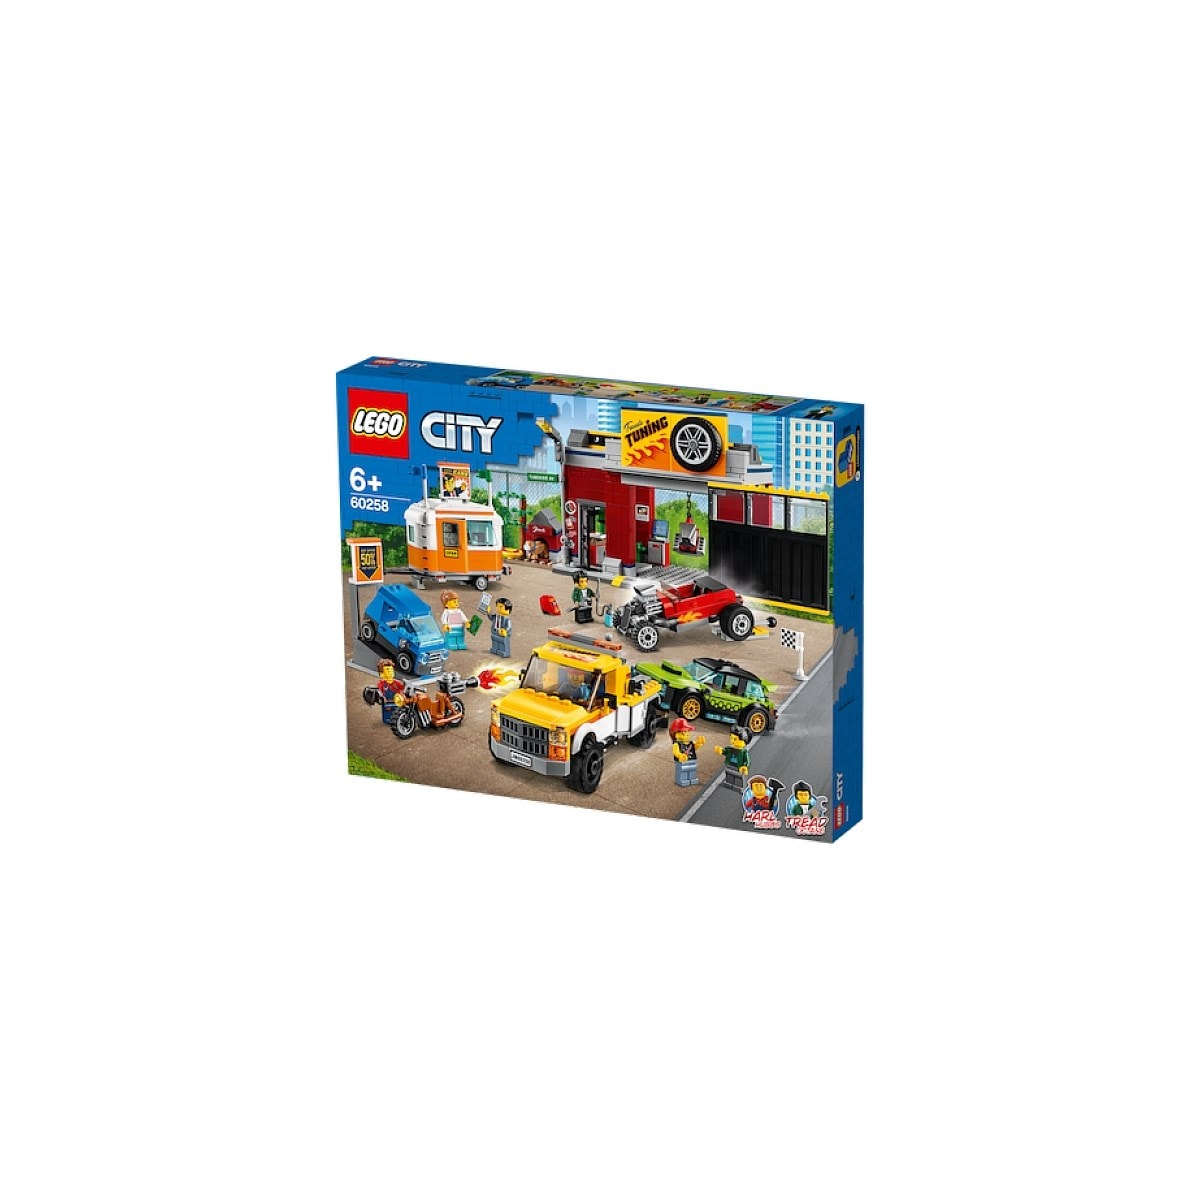 Lego city 60258 - l'atelier de tuning